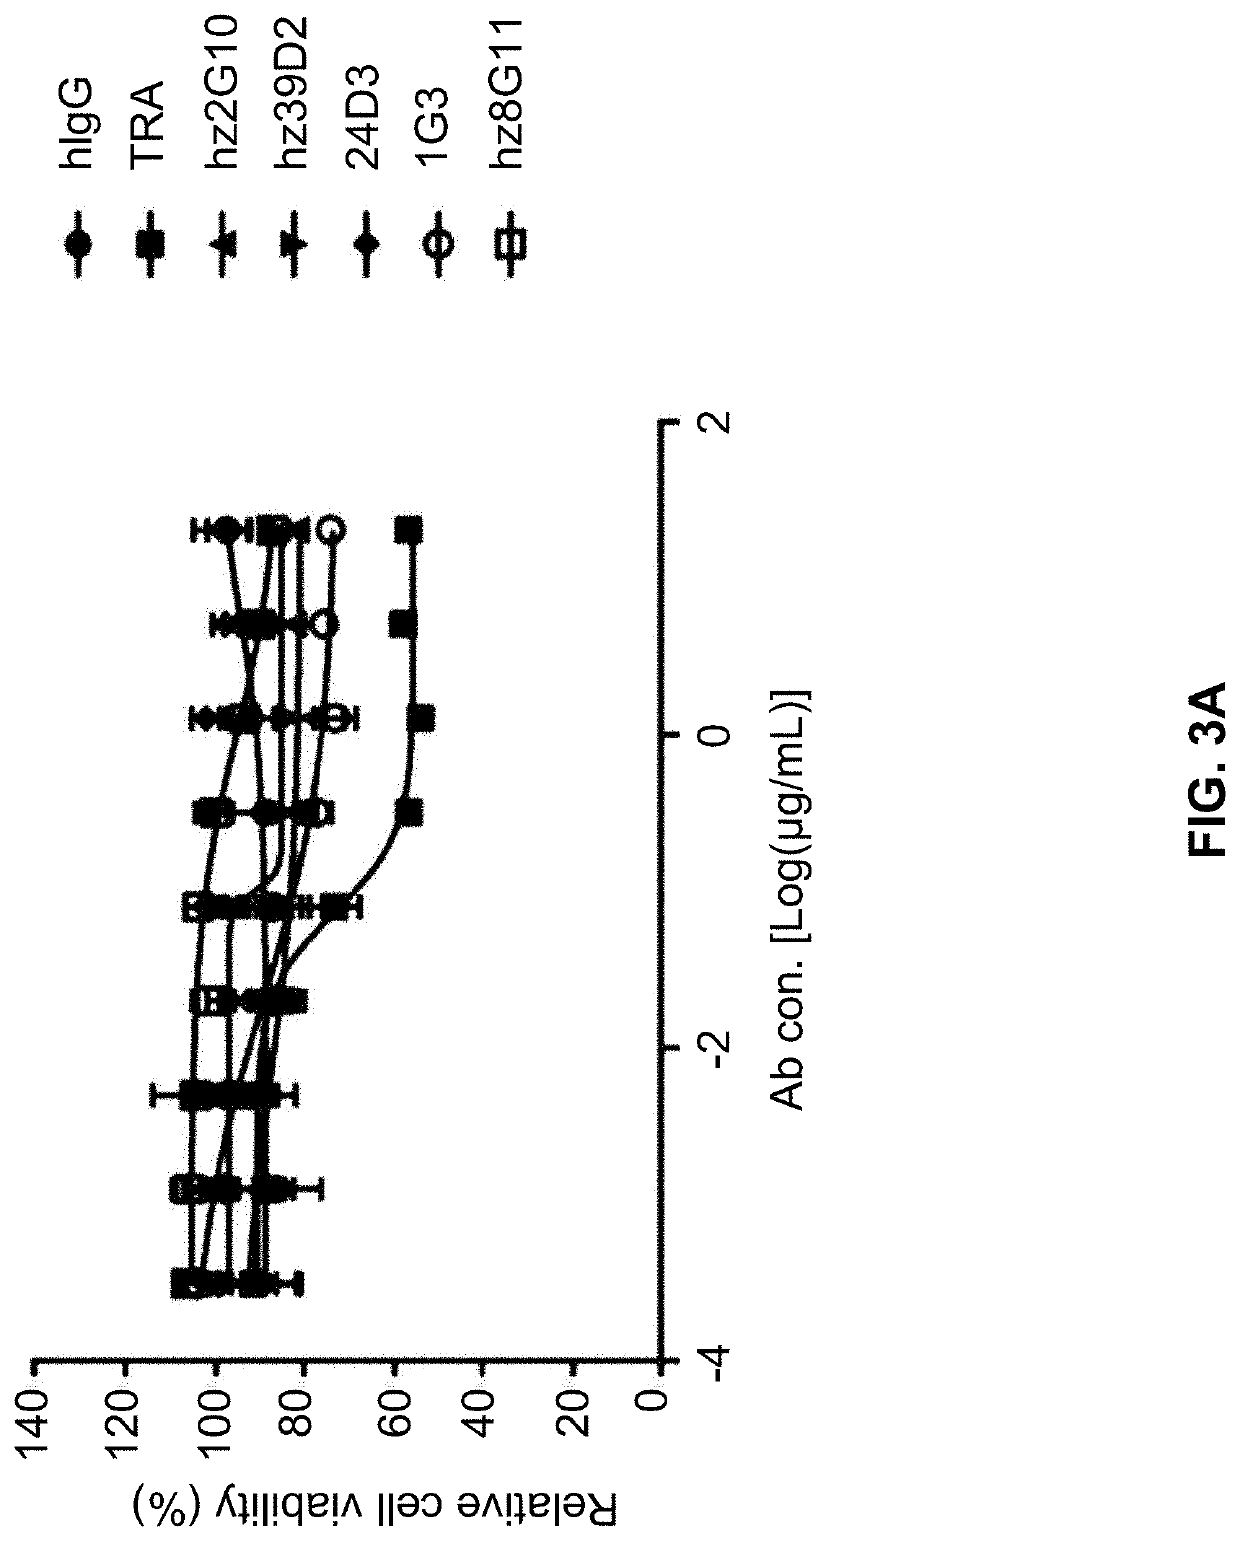 Anti-her2 antibody or antigen-binding fragment thereof, and chimeric antigen receptor comprising same